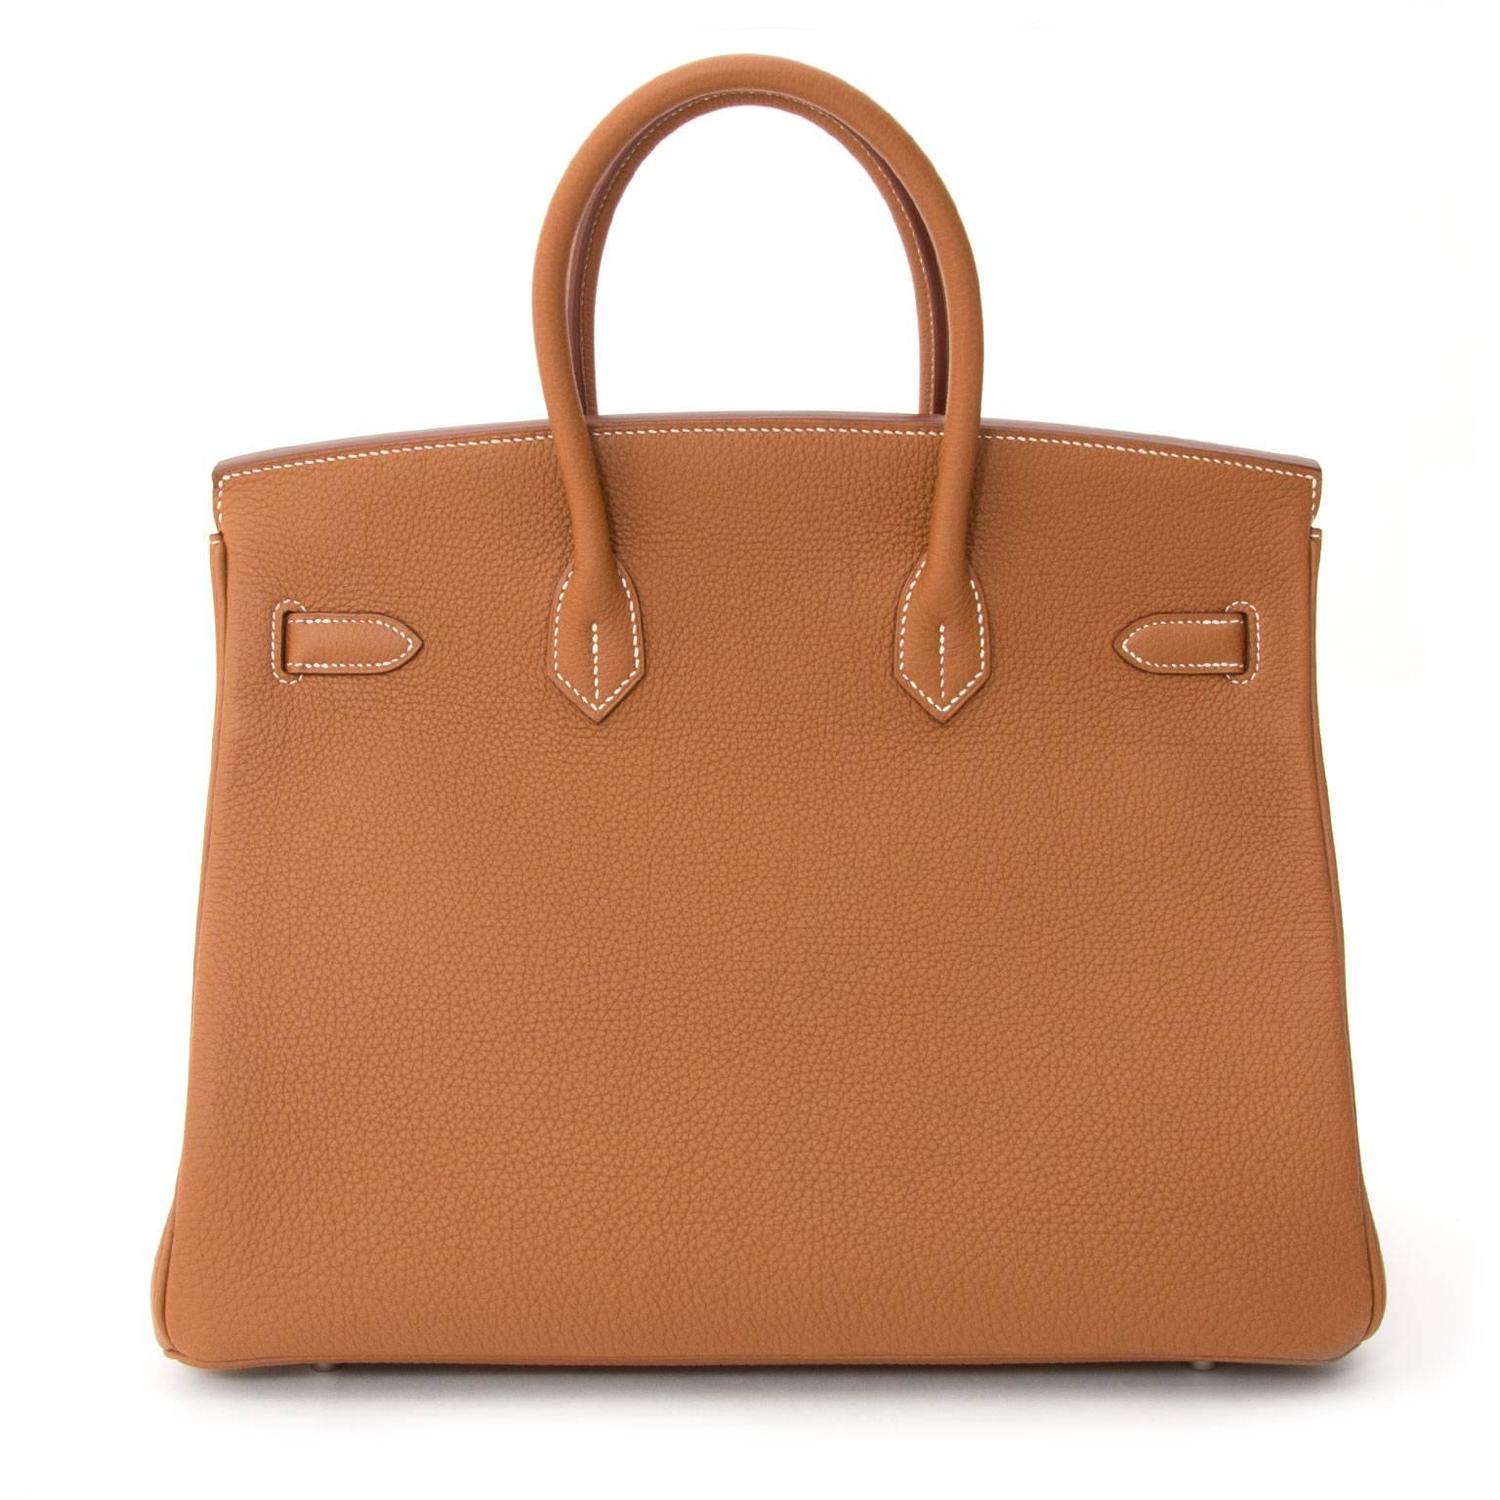 BRAND NEW Hermès Birkin Bag 35 PHW Togo Gold at 1stdibs